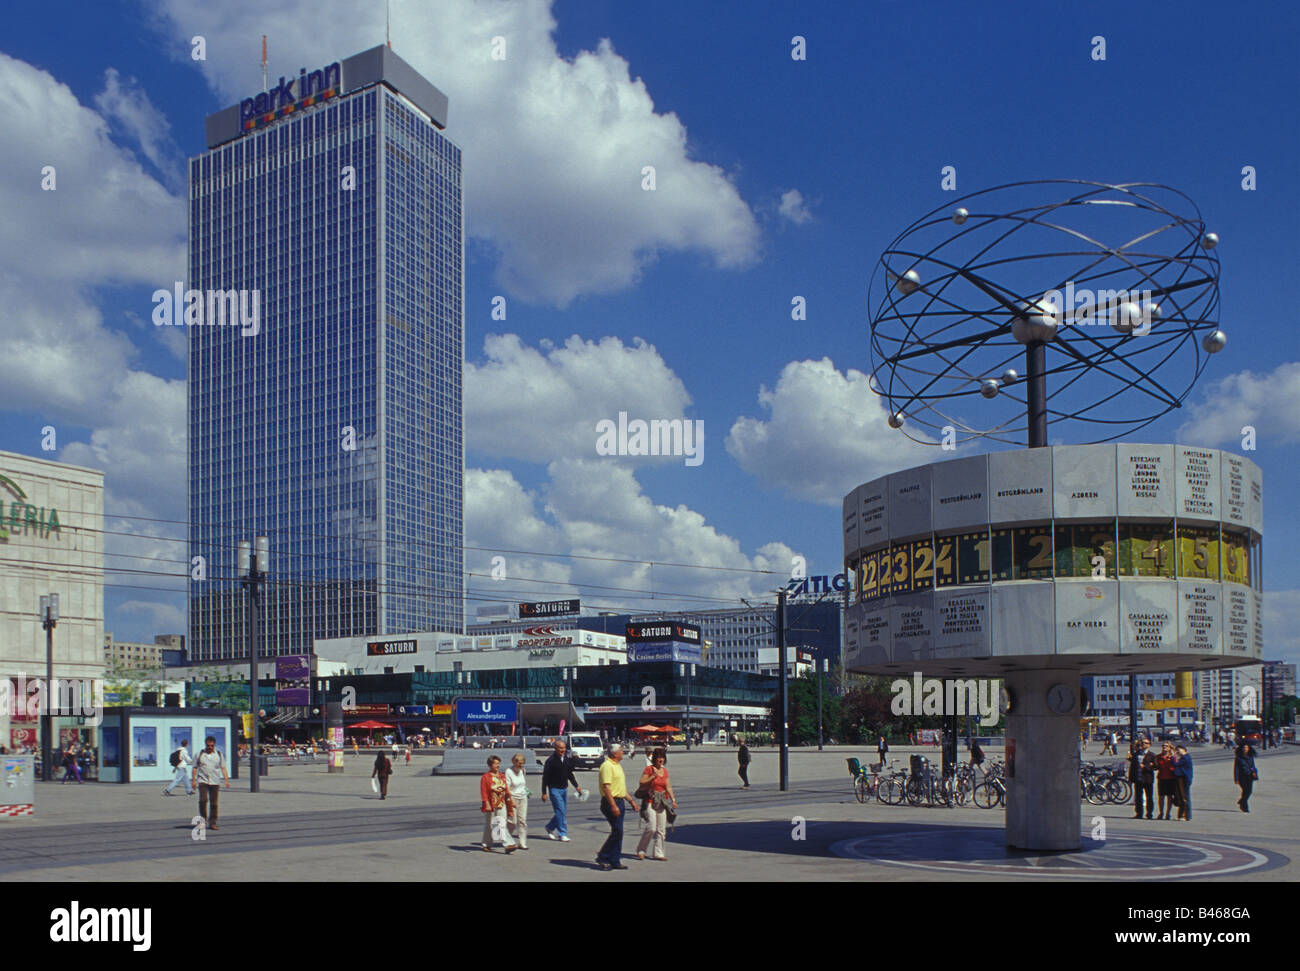 Alexanderplatz square, world clock, Park Inn Hotel, Berlin Mitte district, Germany, Europe. Stock Photo